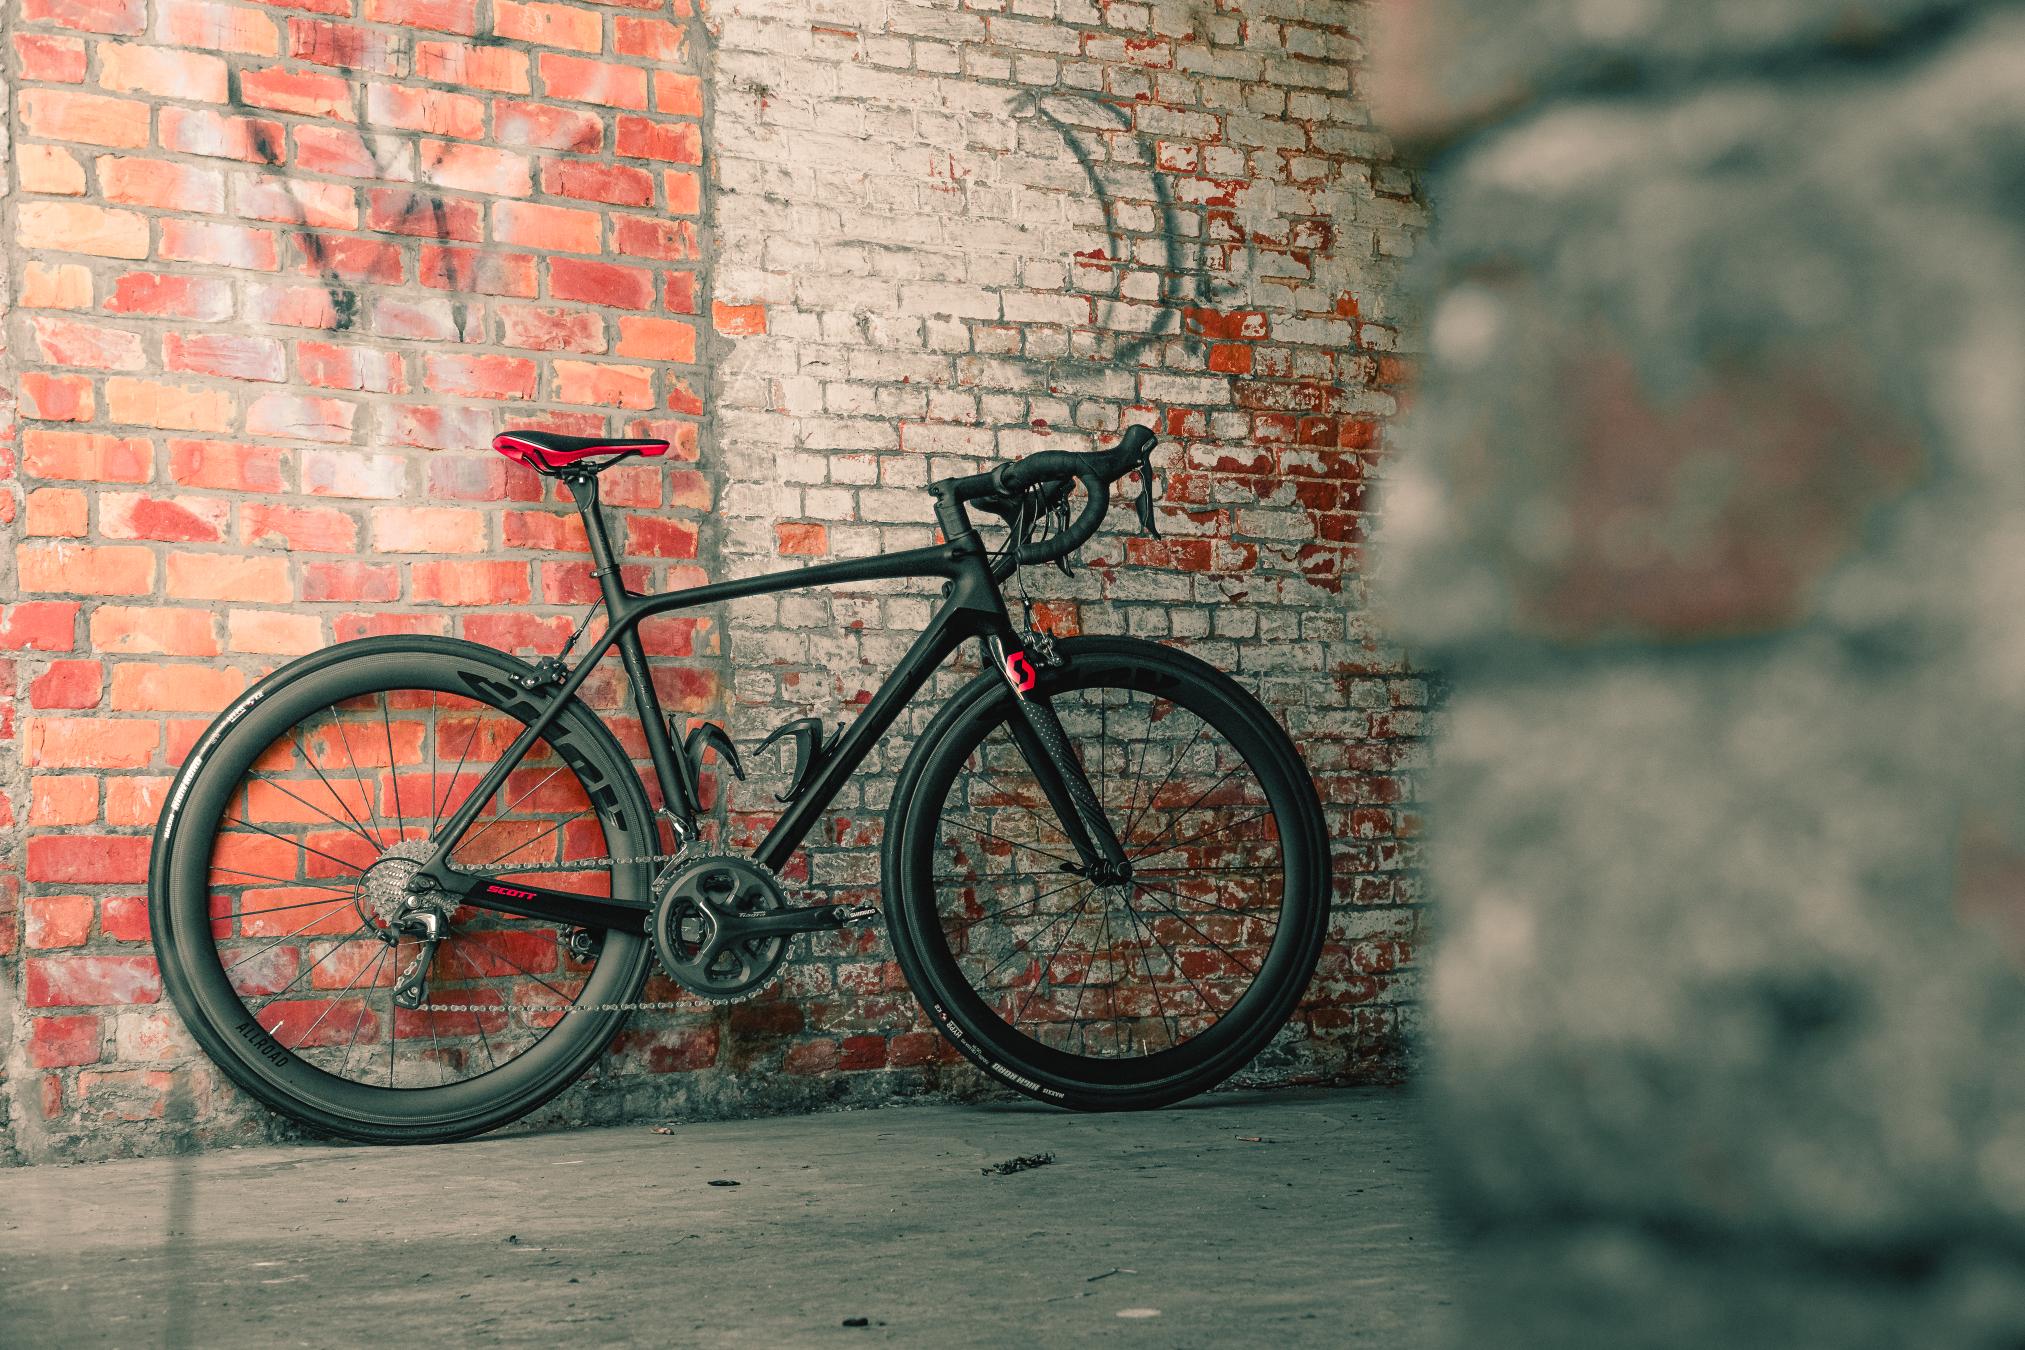 A bike standing against a brick wall.